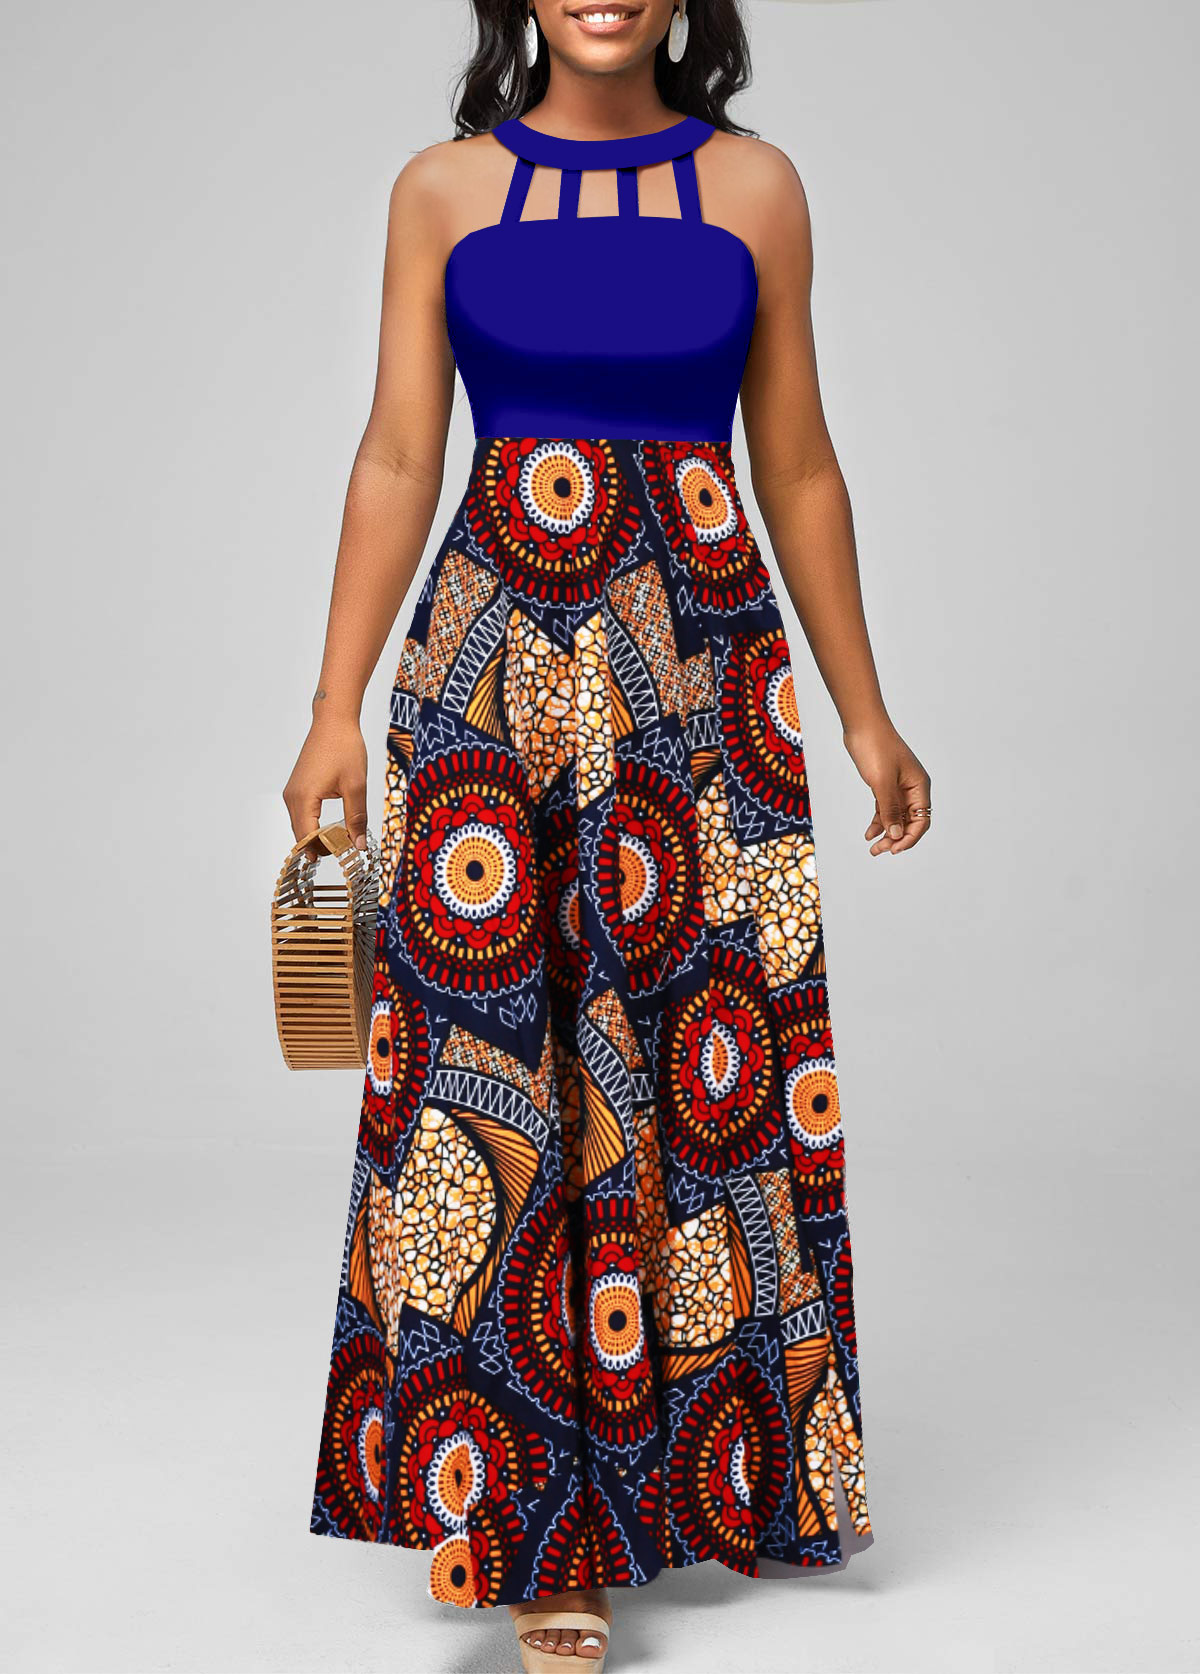 Navy Cage Neck African Tribal Print Sleeveless Maxi Dress